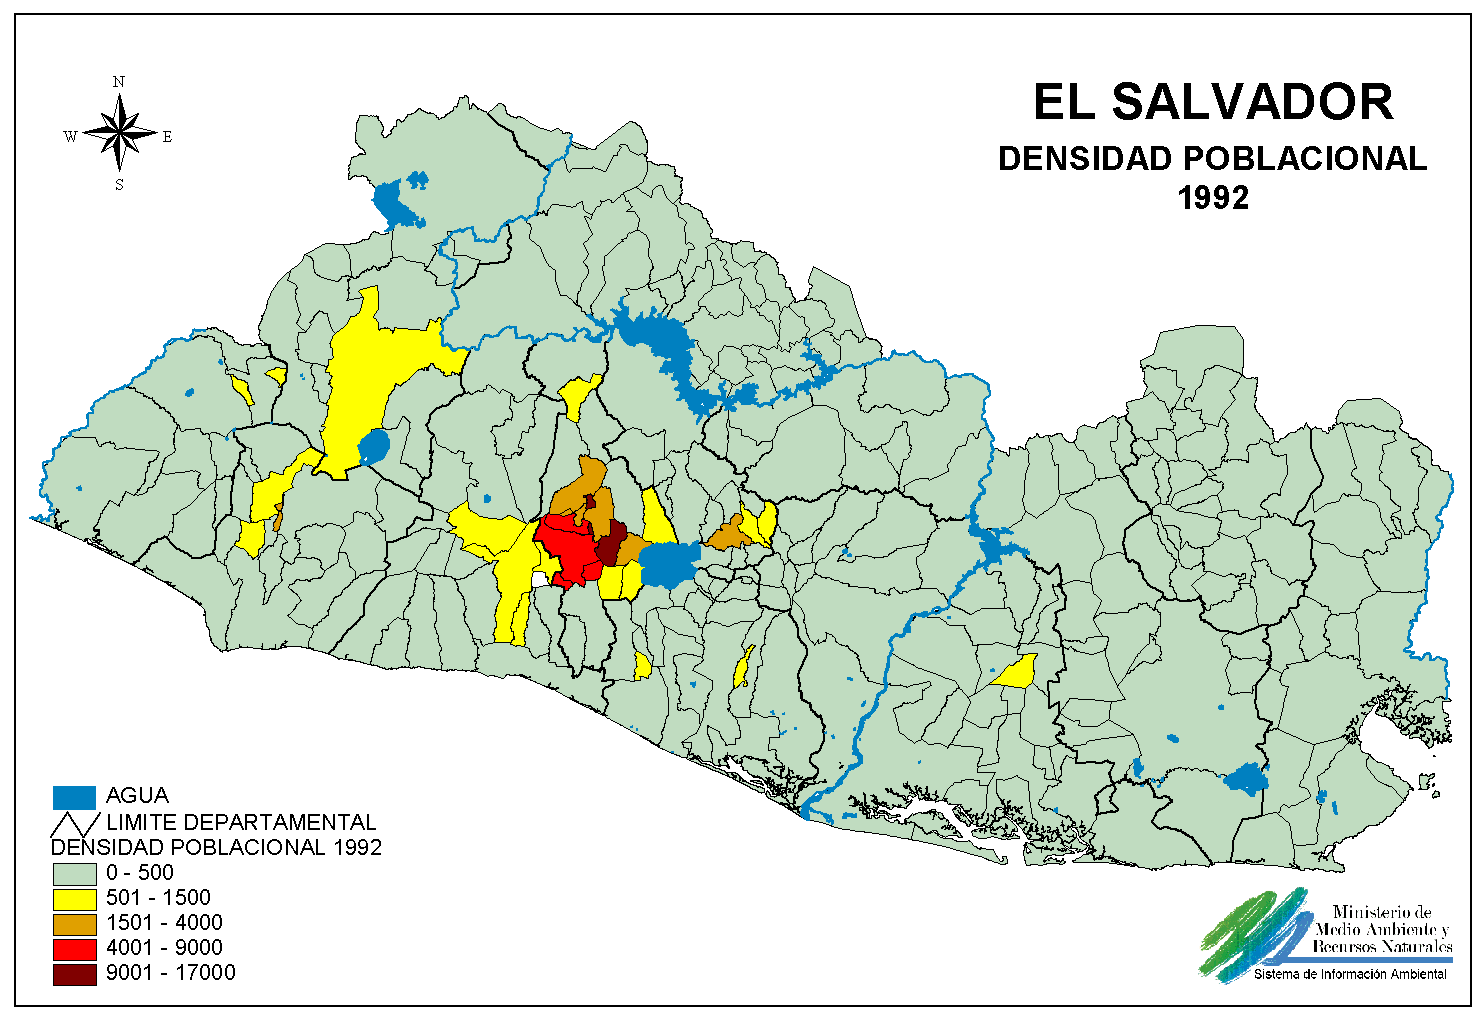 El Salvador Population Density Map 1992